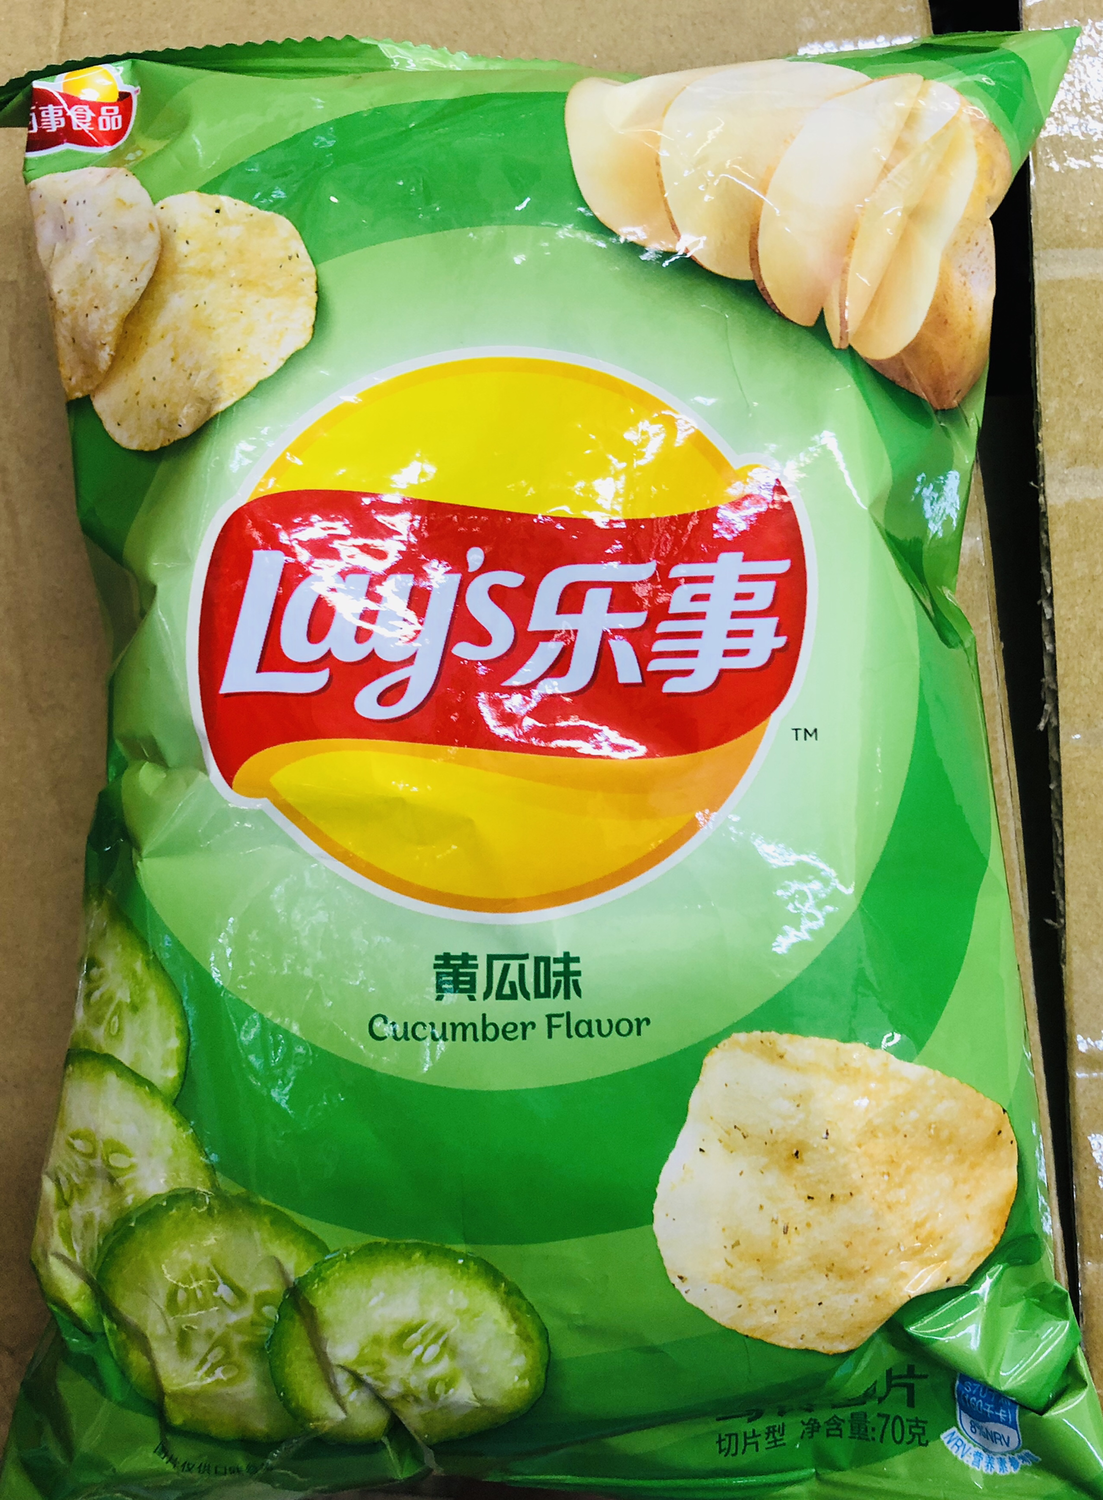 乐事薯片黄瓜味 Lays Cucumber Flavor Potat ~70g